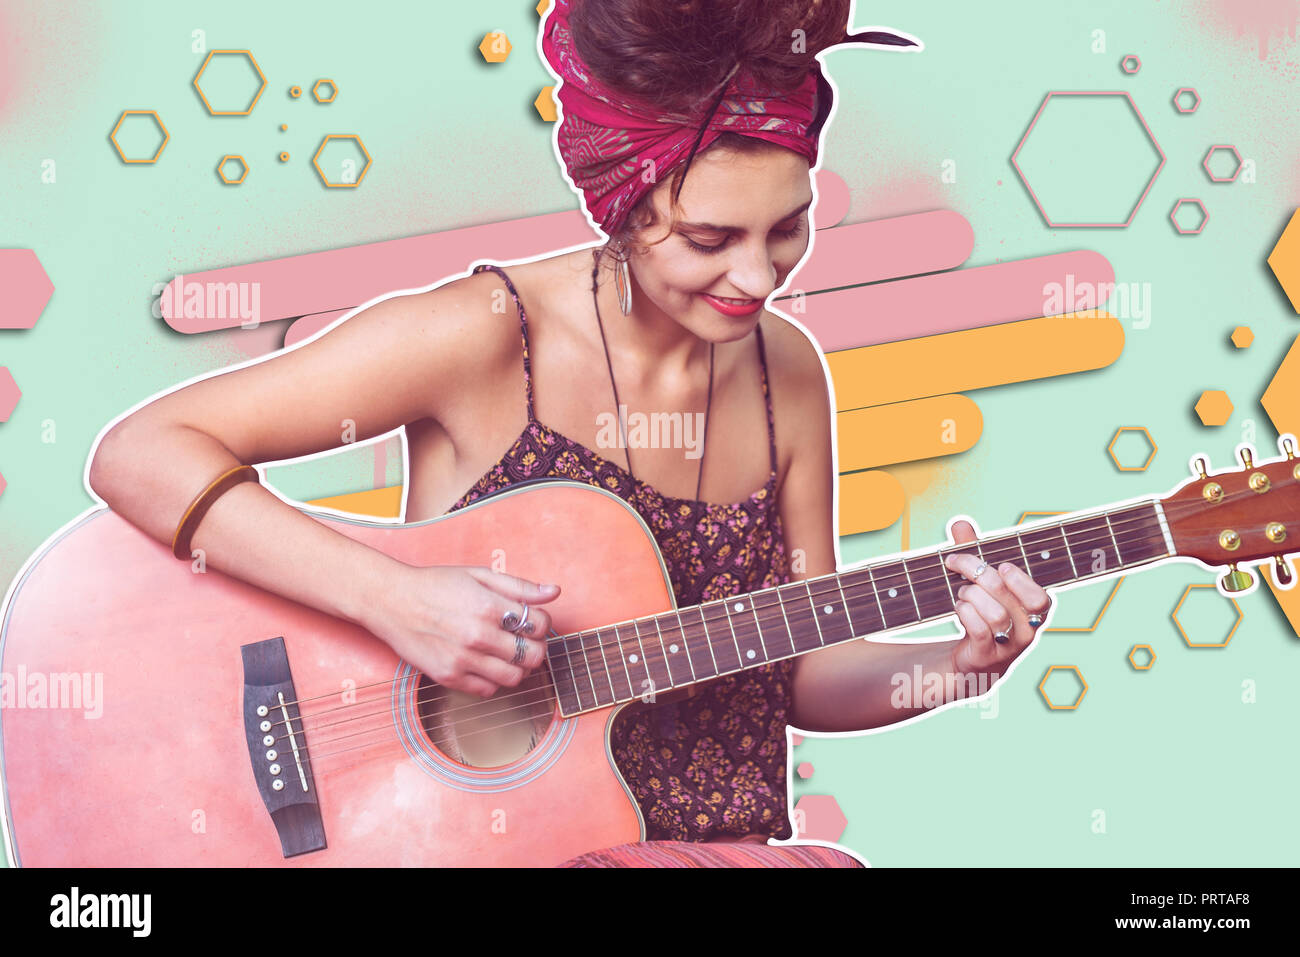 Wundervolle talanted junge Dame Spielen einer Gitarre Stockfoto